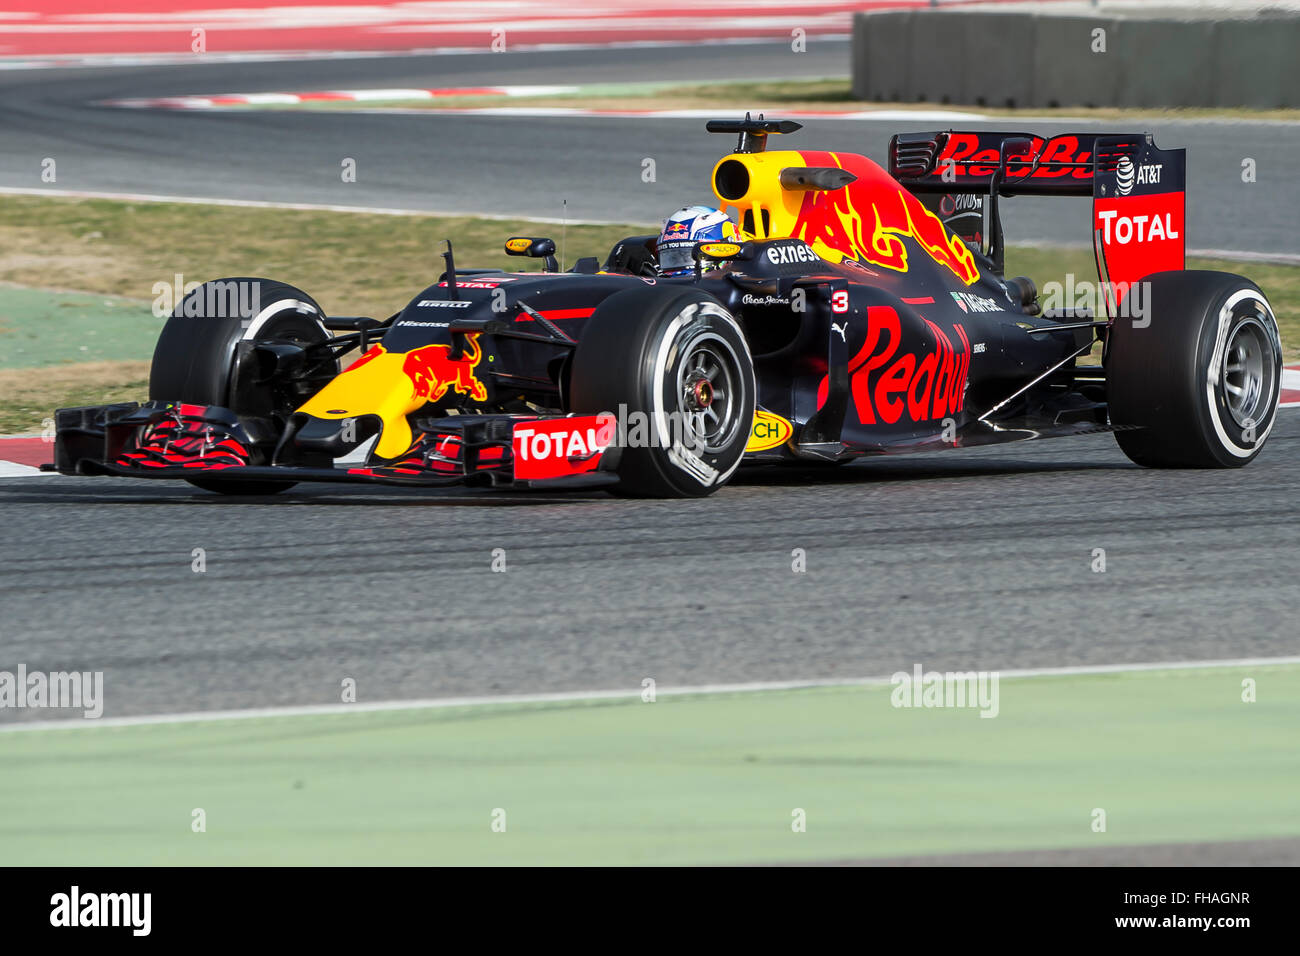 Driver Daniel Ricciardo. Team Red Bull Racing. Formula One Test Days at Circuit de Catalunya. Montmelo, Spain. February 22, 2016 Stock Photo